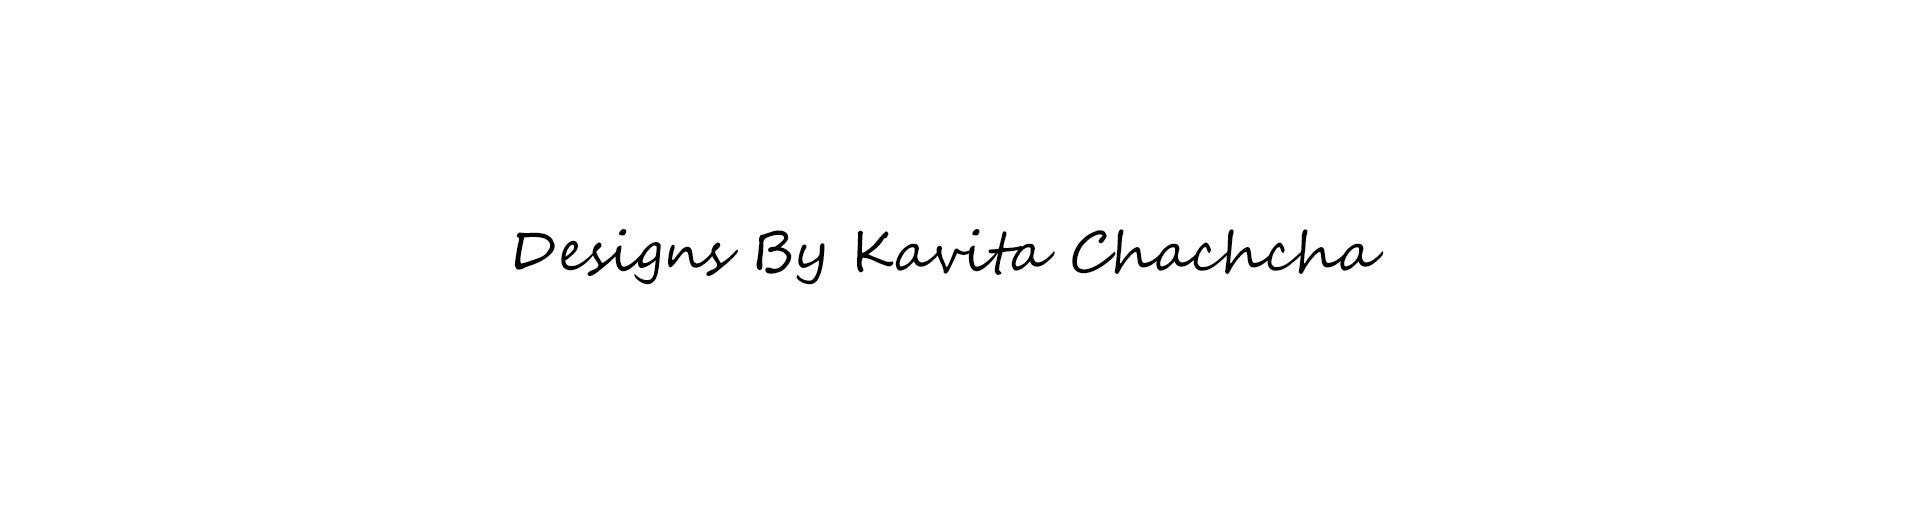 Kavita Chachcha